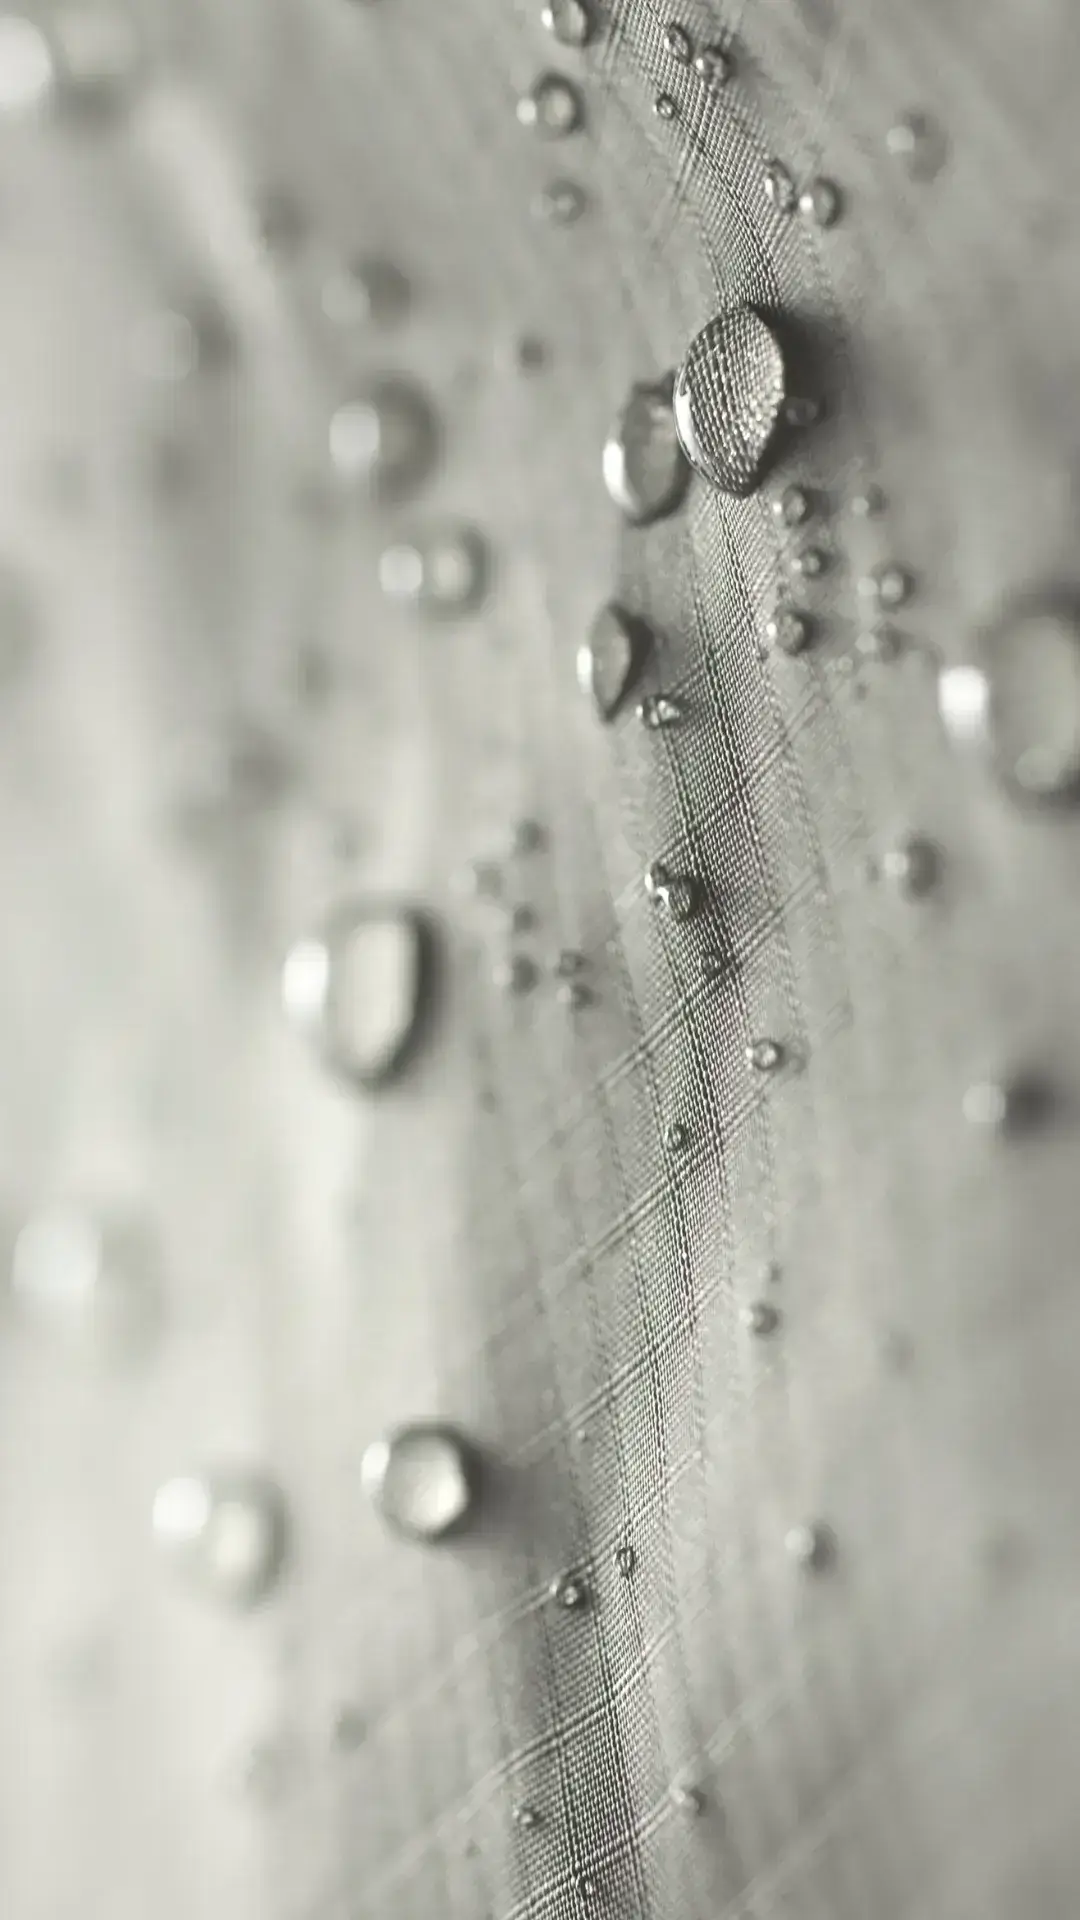 Waterproof Ripstop Fabric